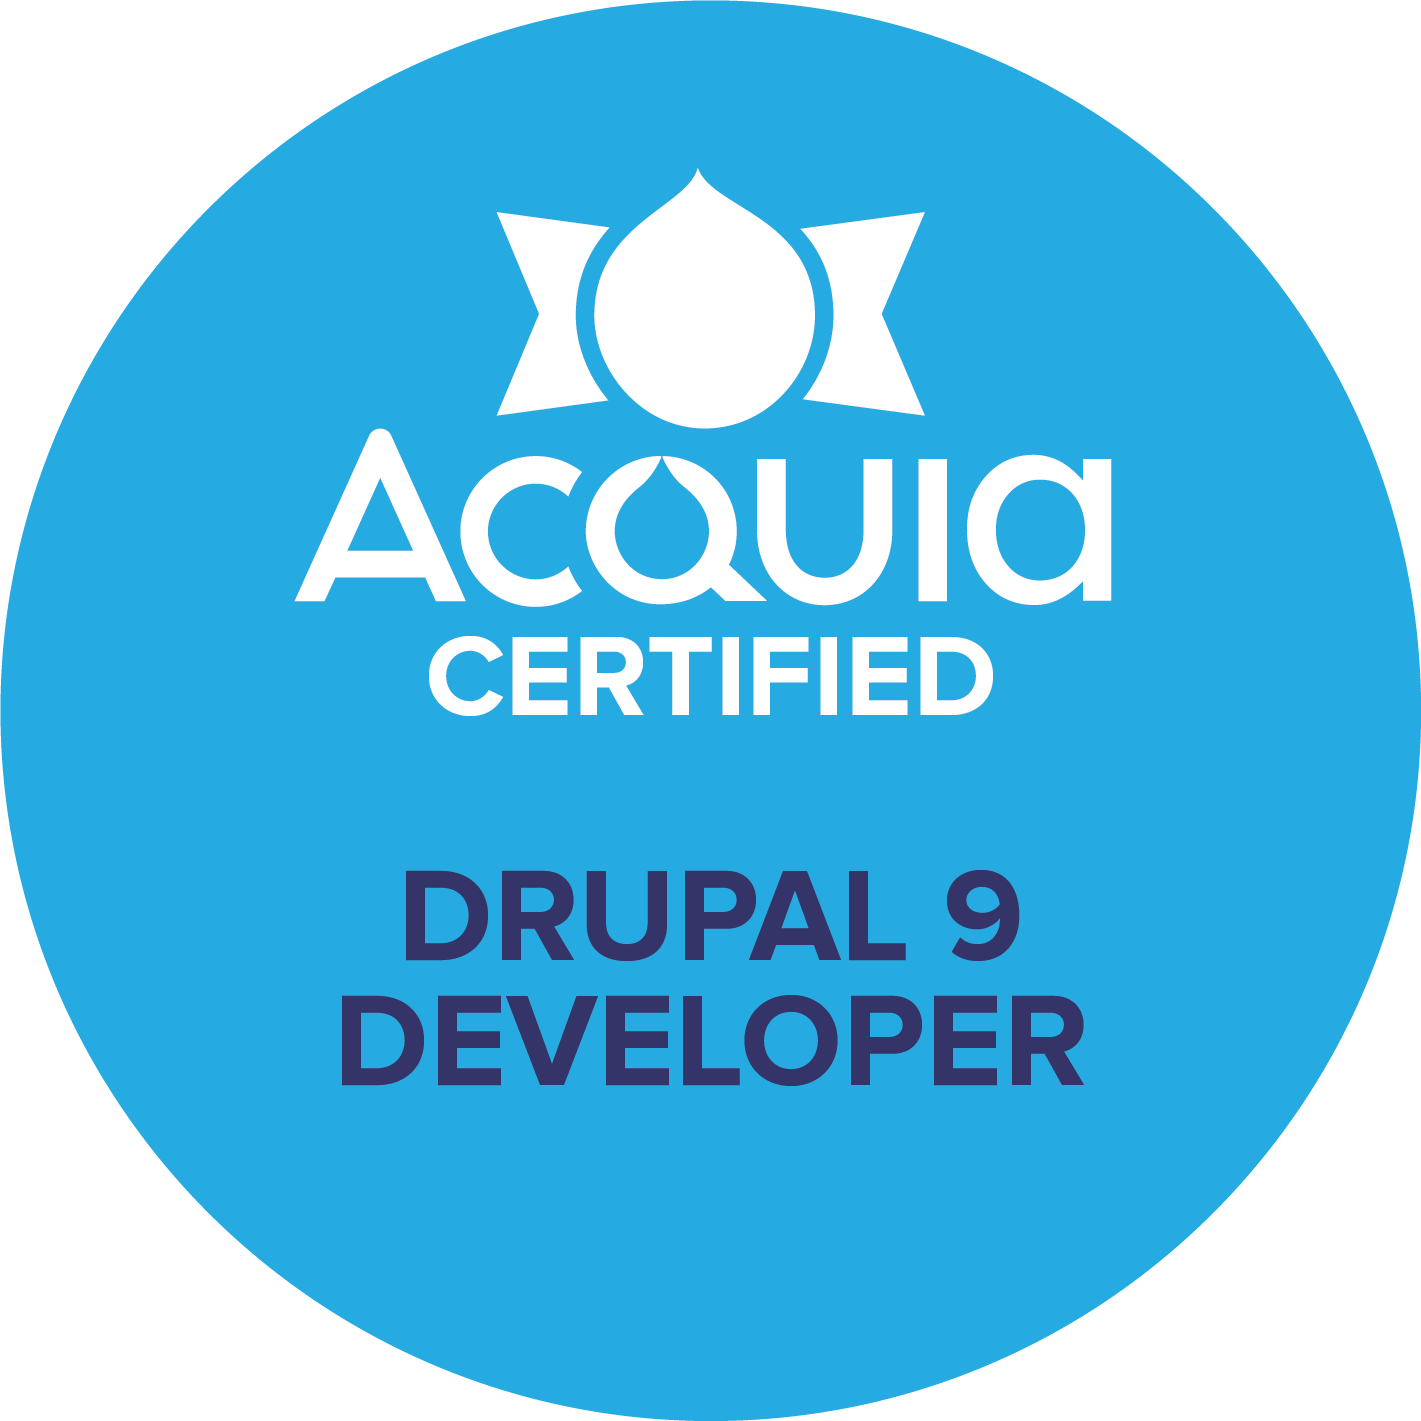 Acquia certified drupal 9 developer